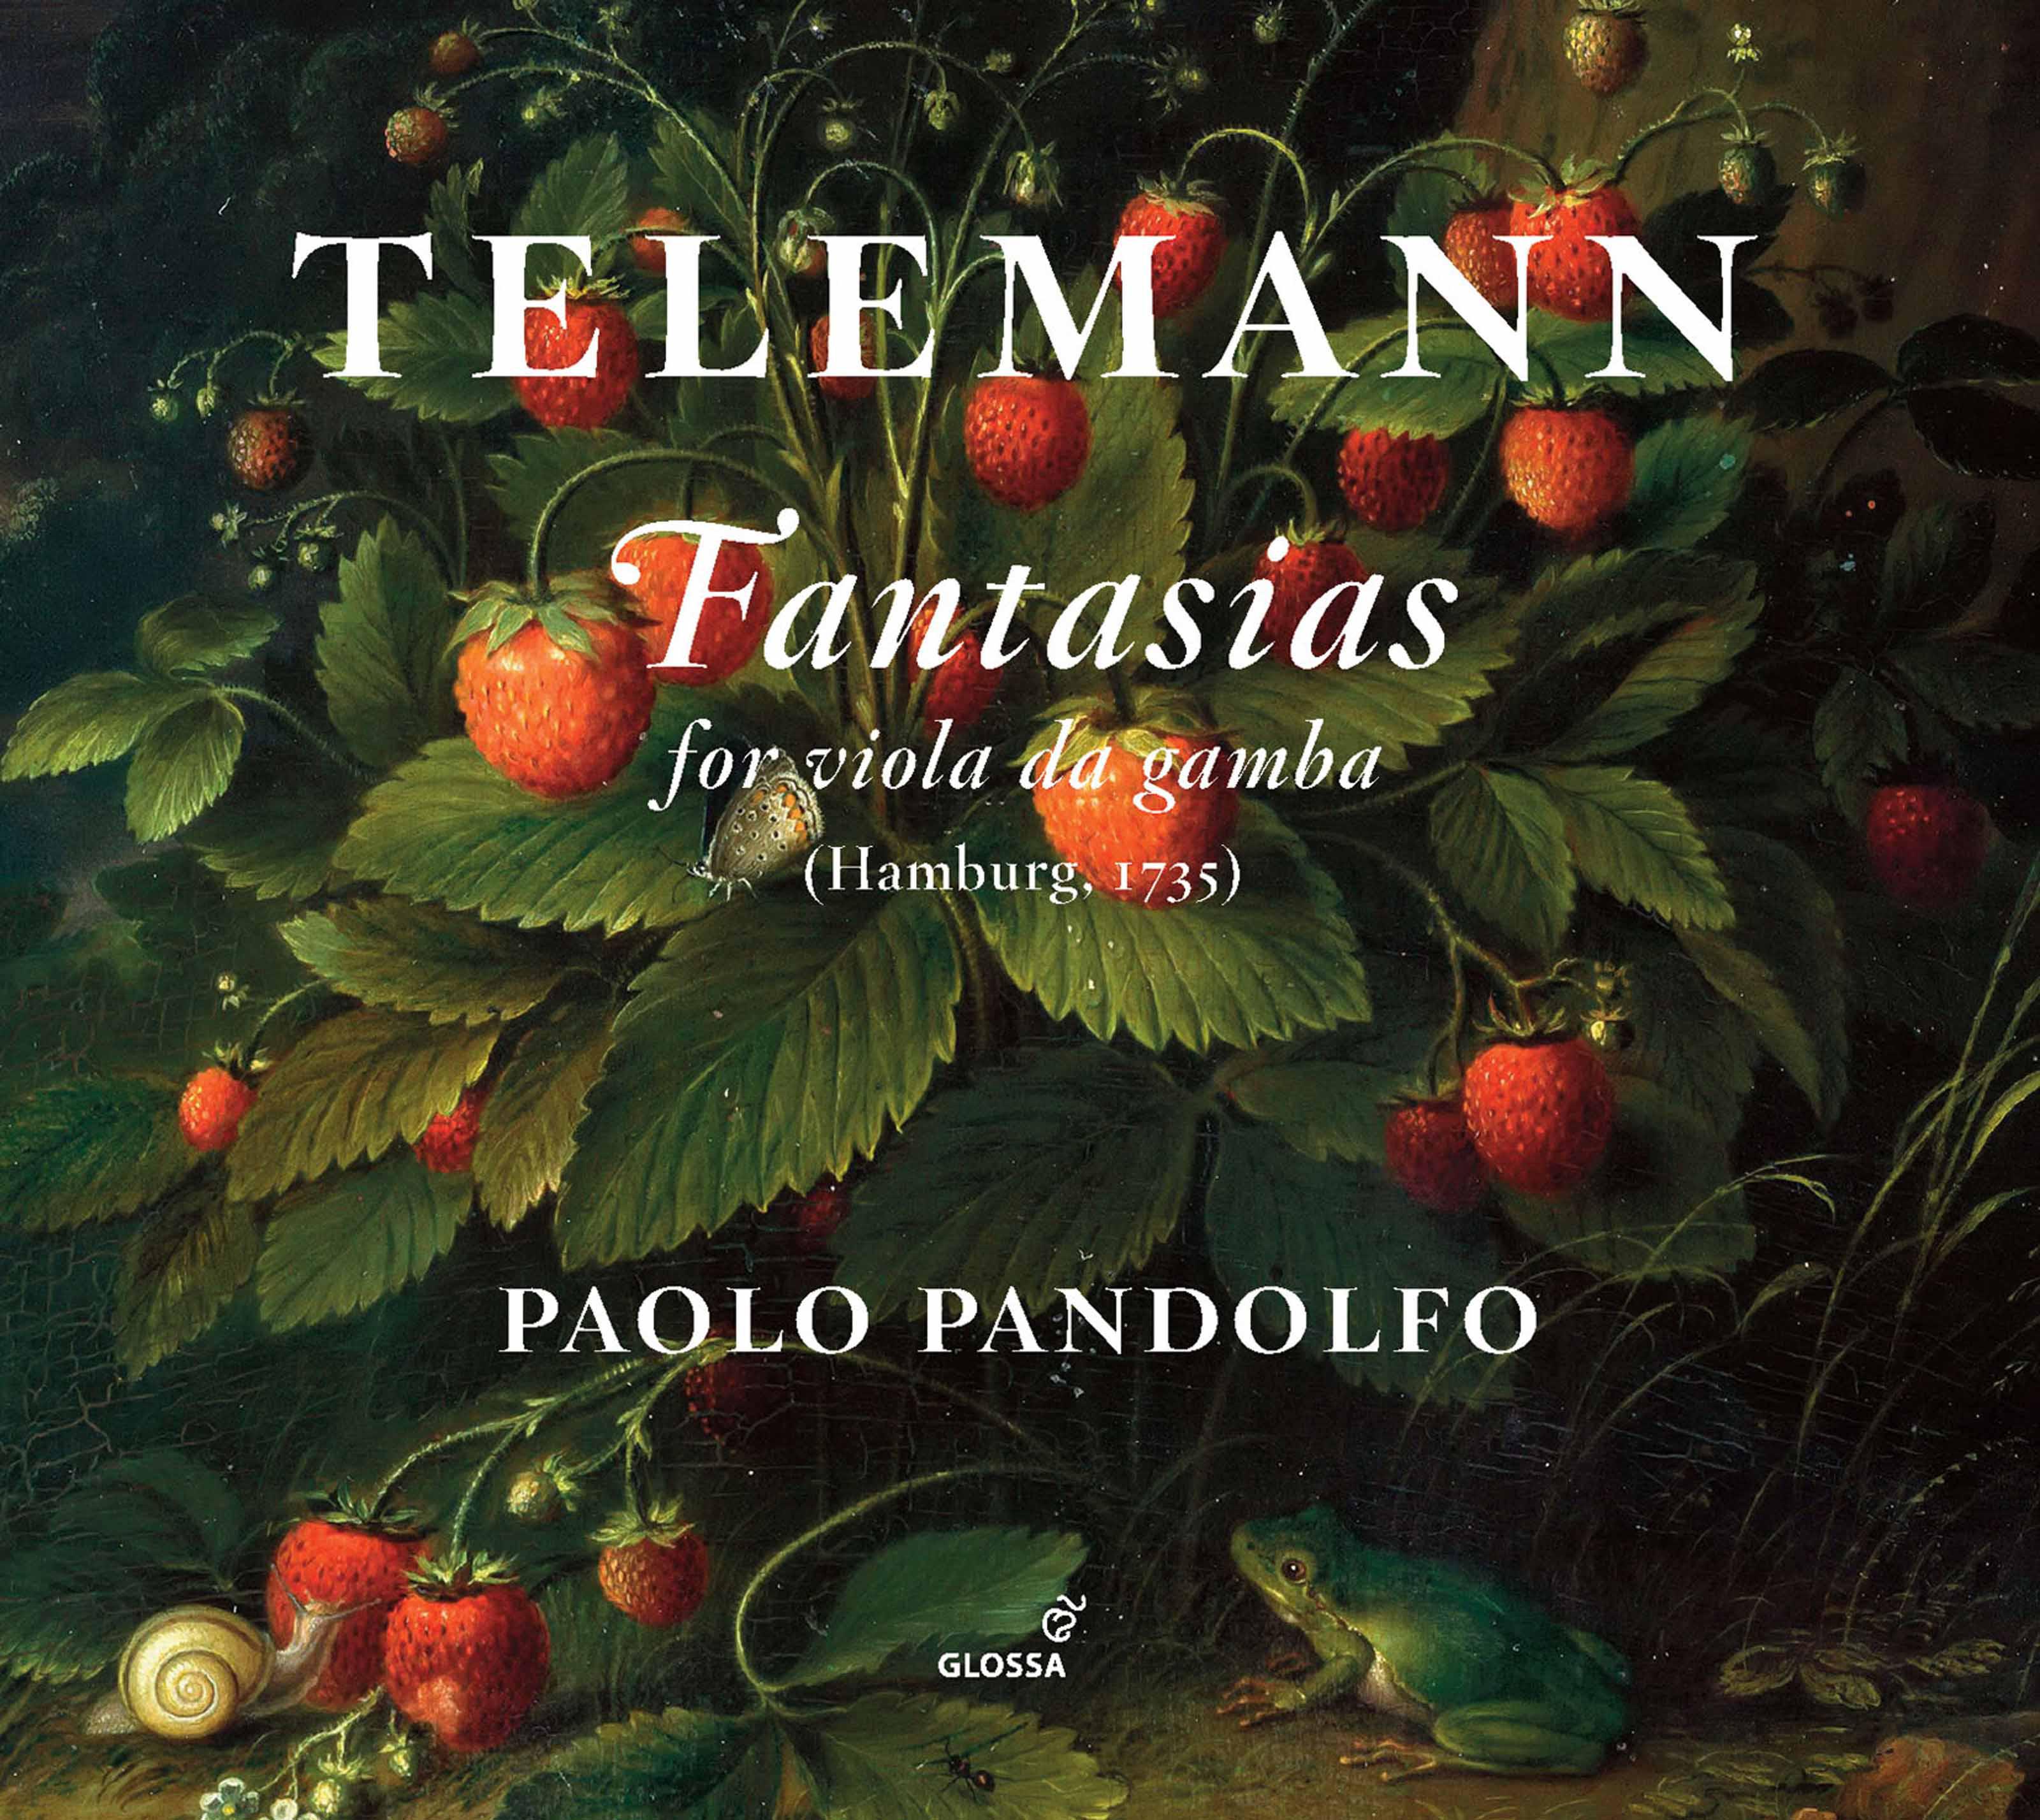 Paolo Pandolfo - Fantasia in D Major, TWV 40:27: IV. Presto